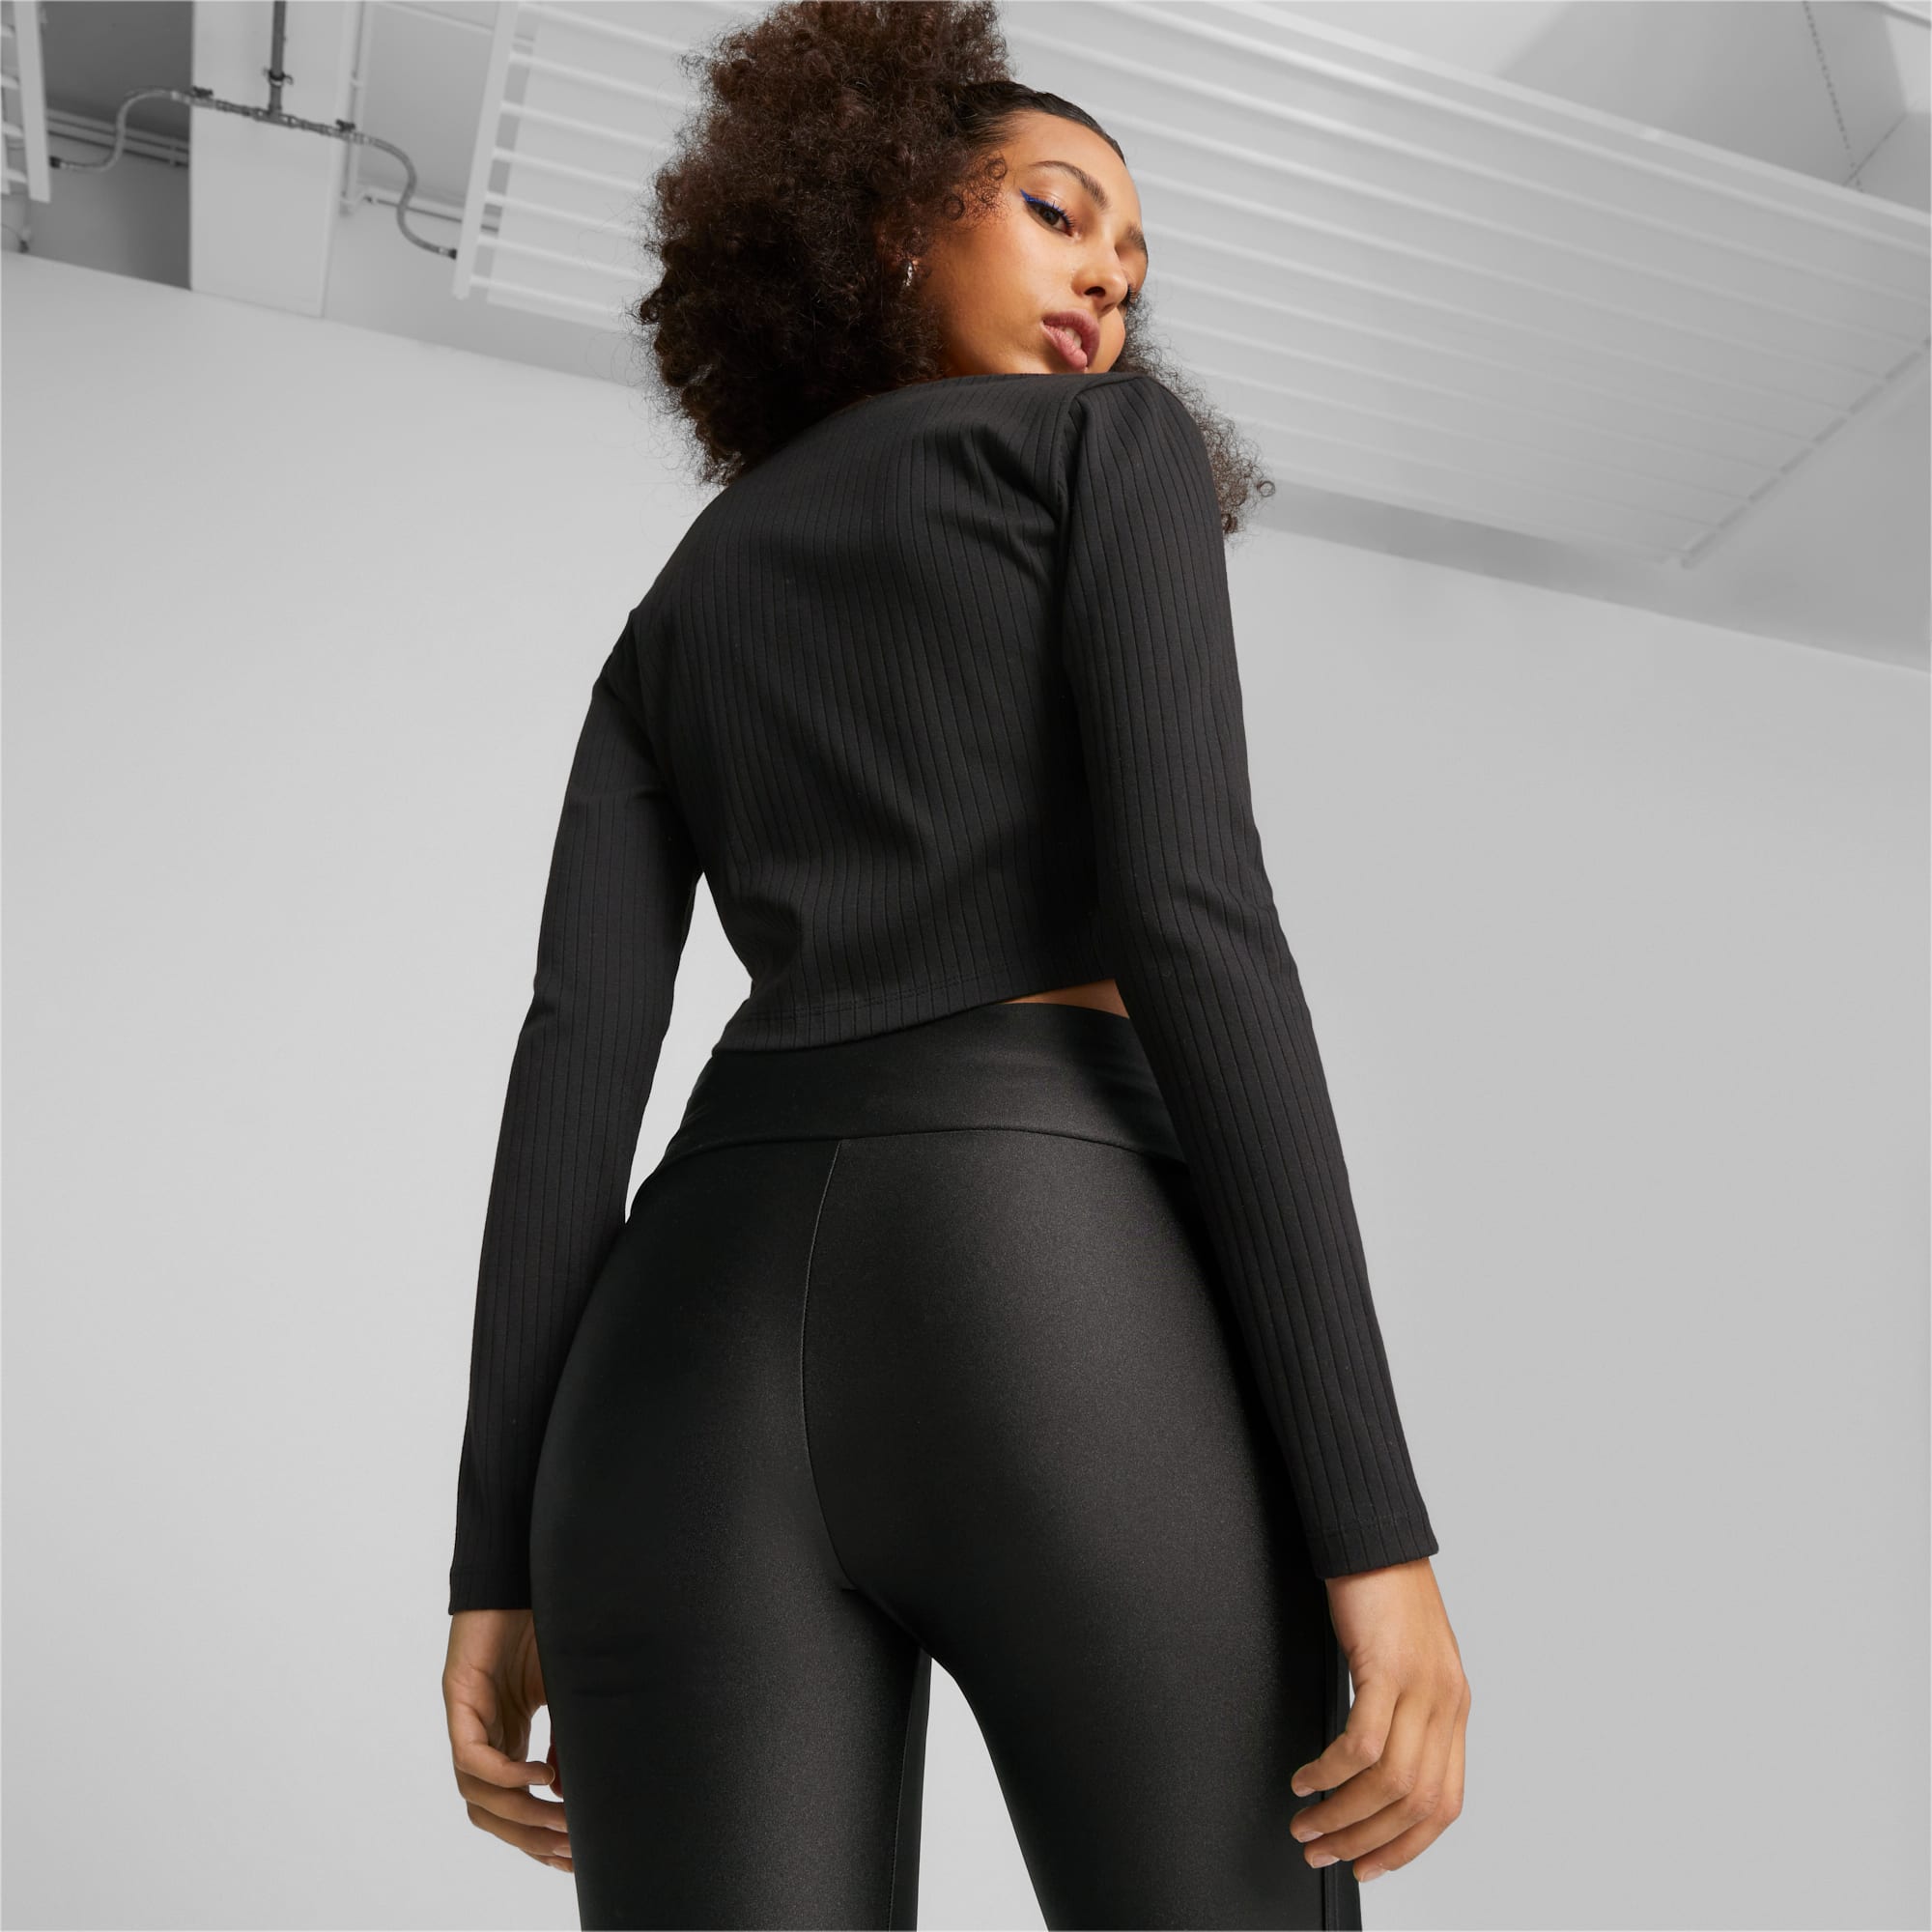 PUMA Classics Women's Ribbed Long Sleeve Shirt, Black, Size S, Clothing